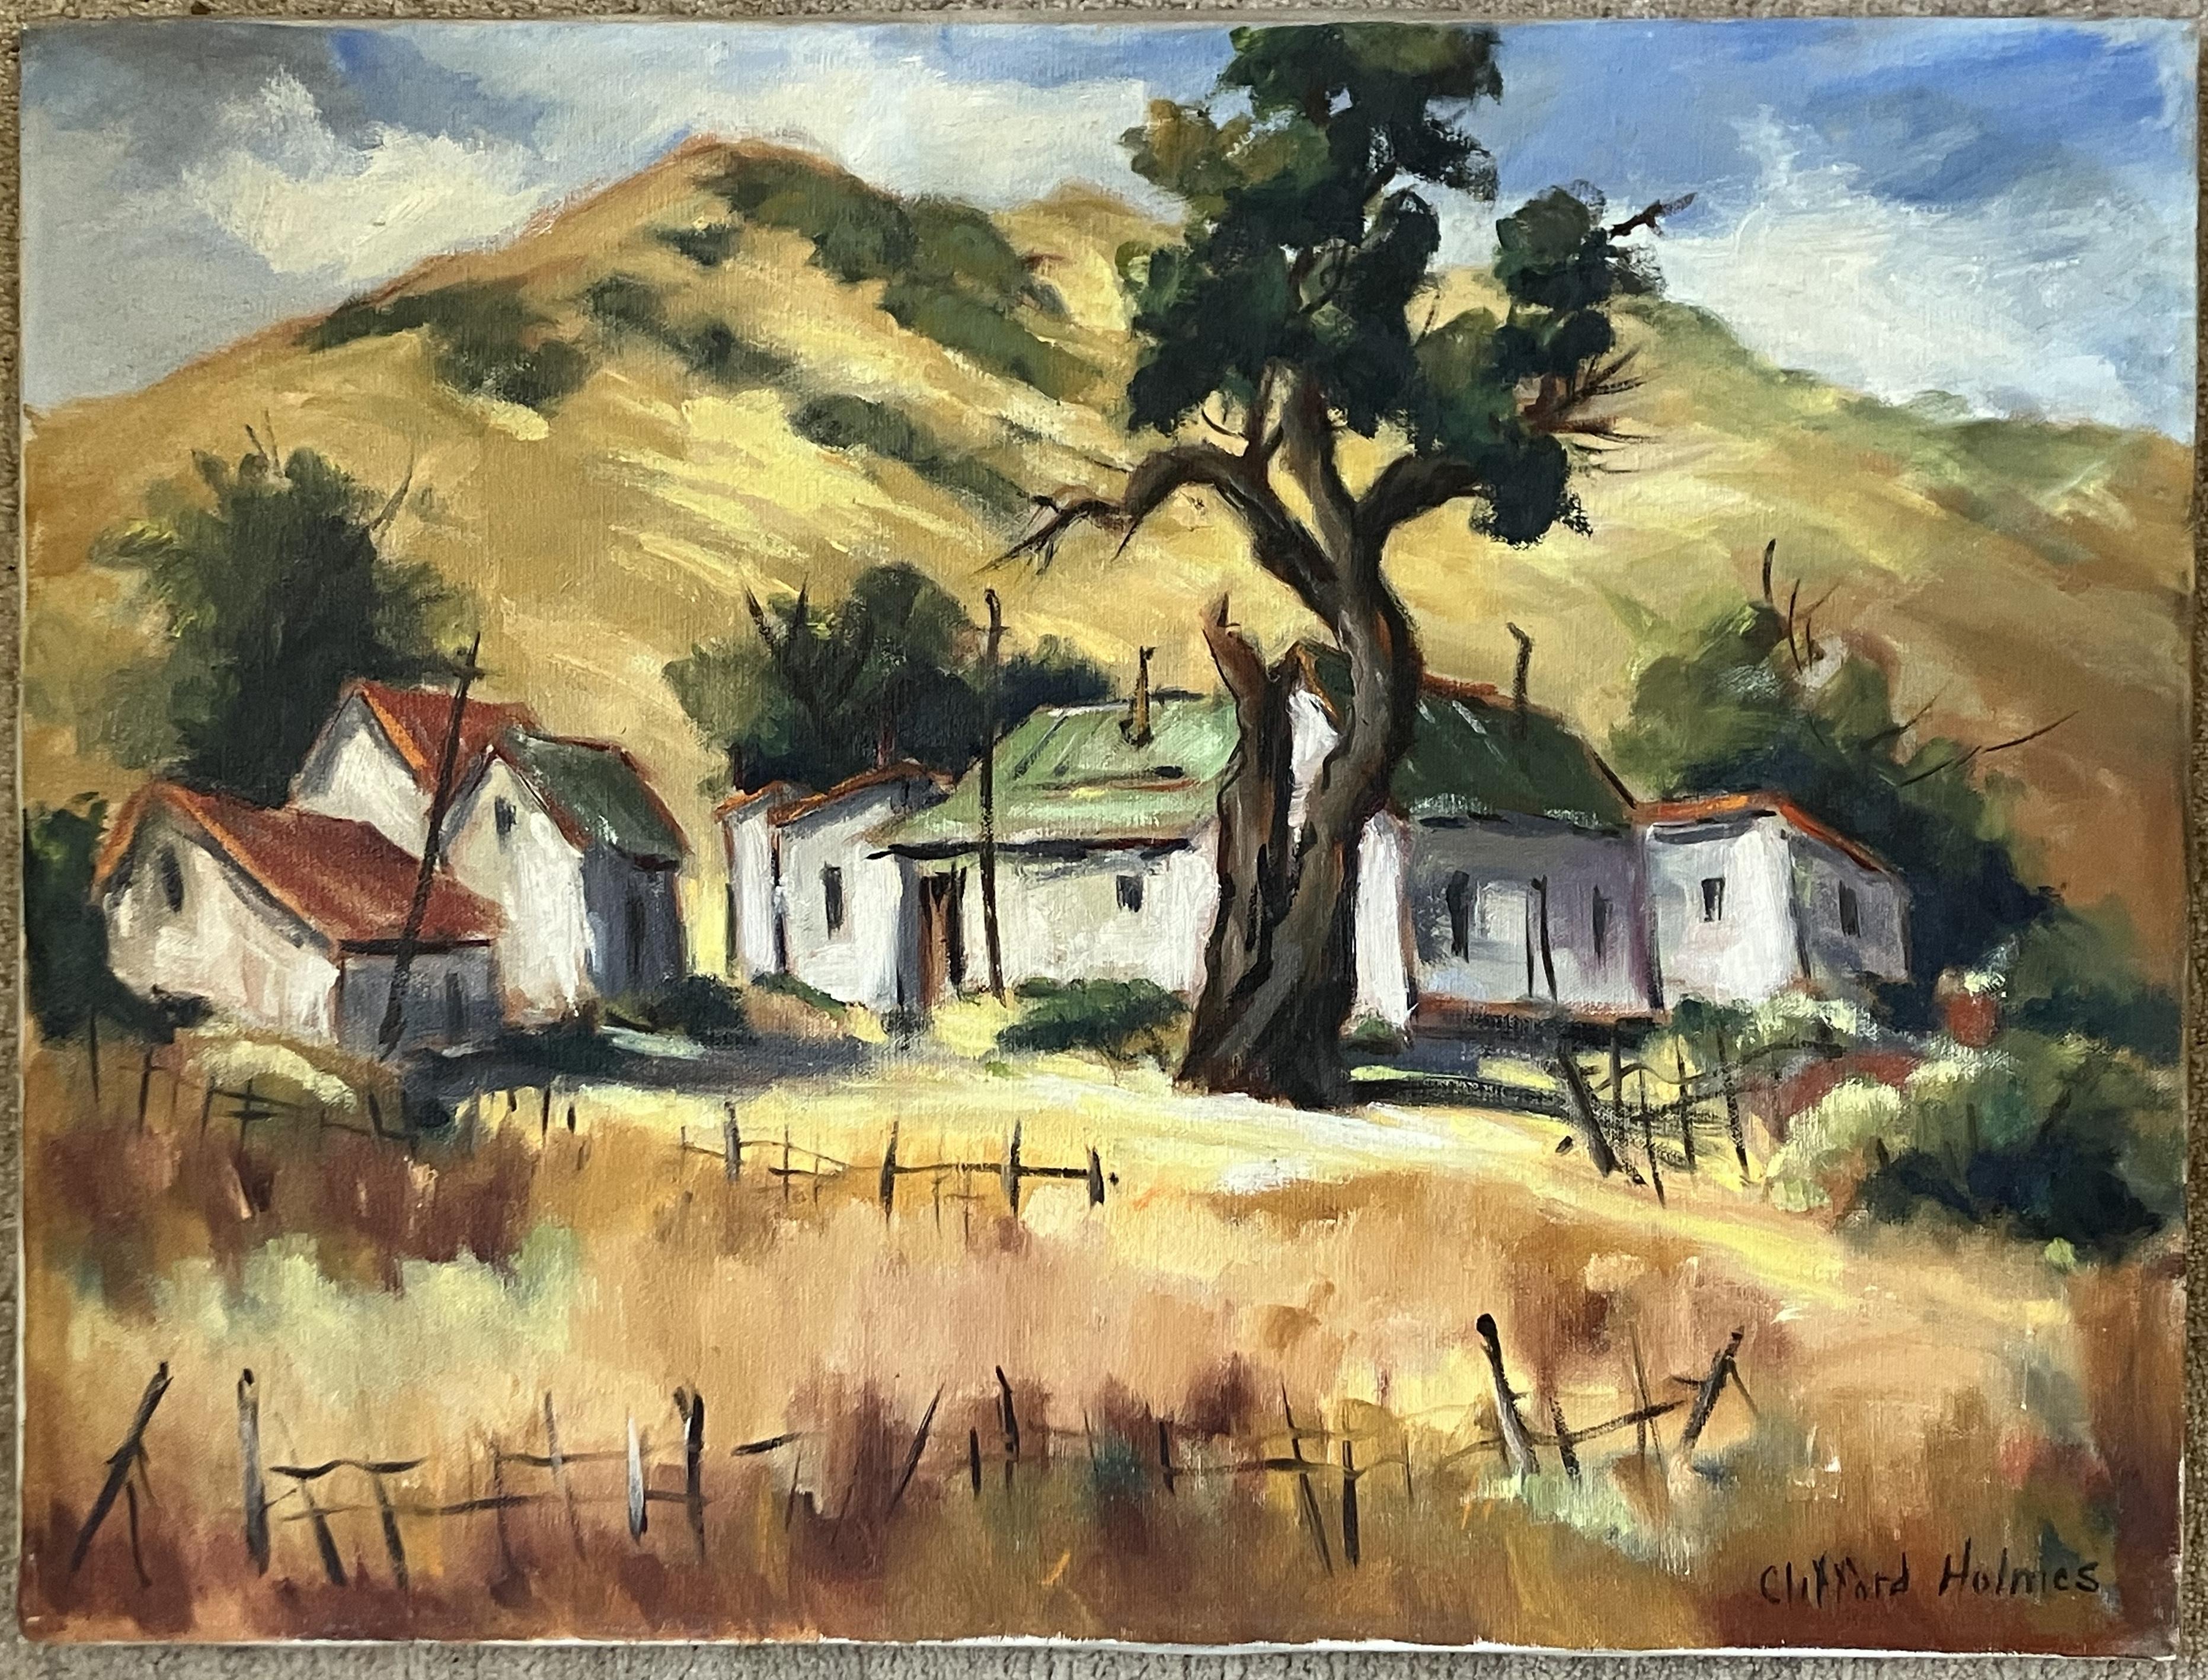 Clifford Holmes Landscape Painting - Dublin, California Ranch